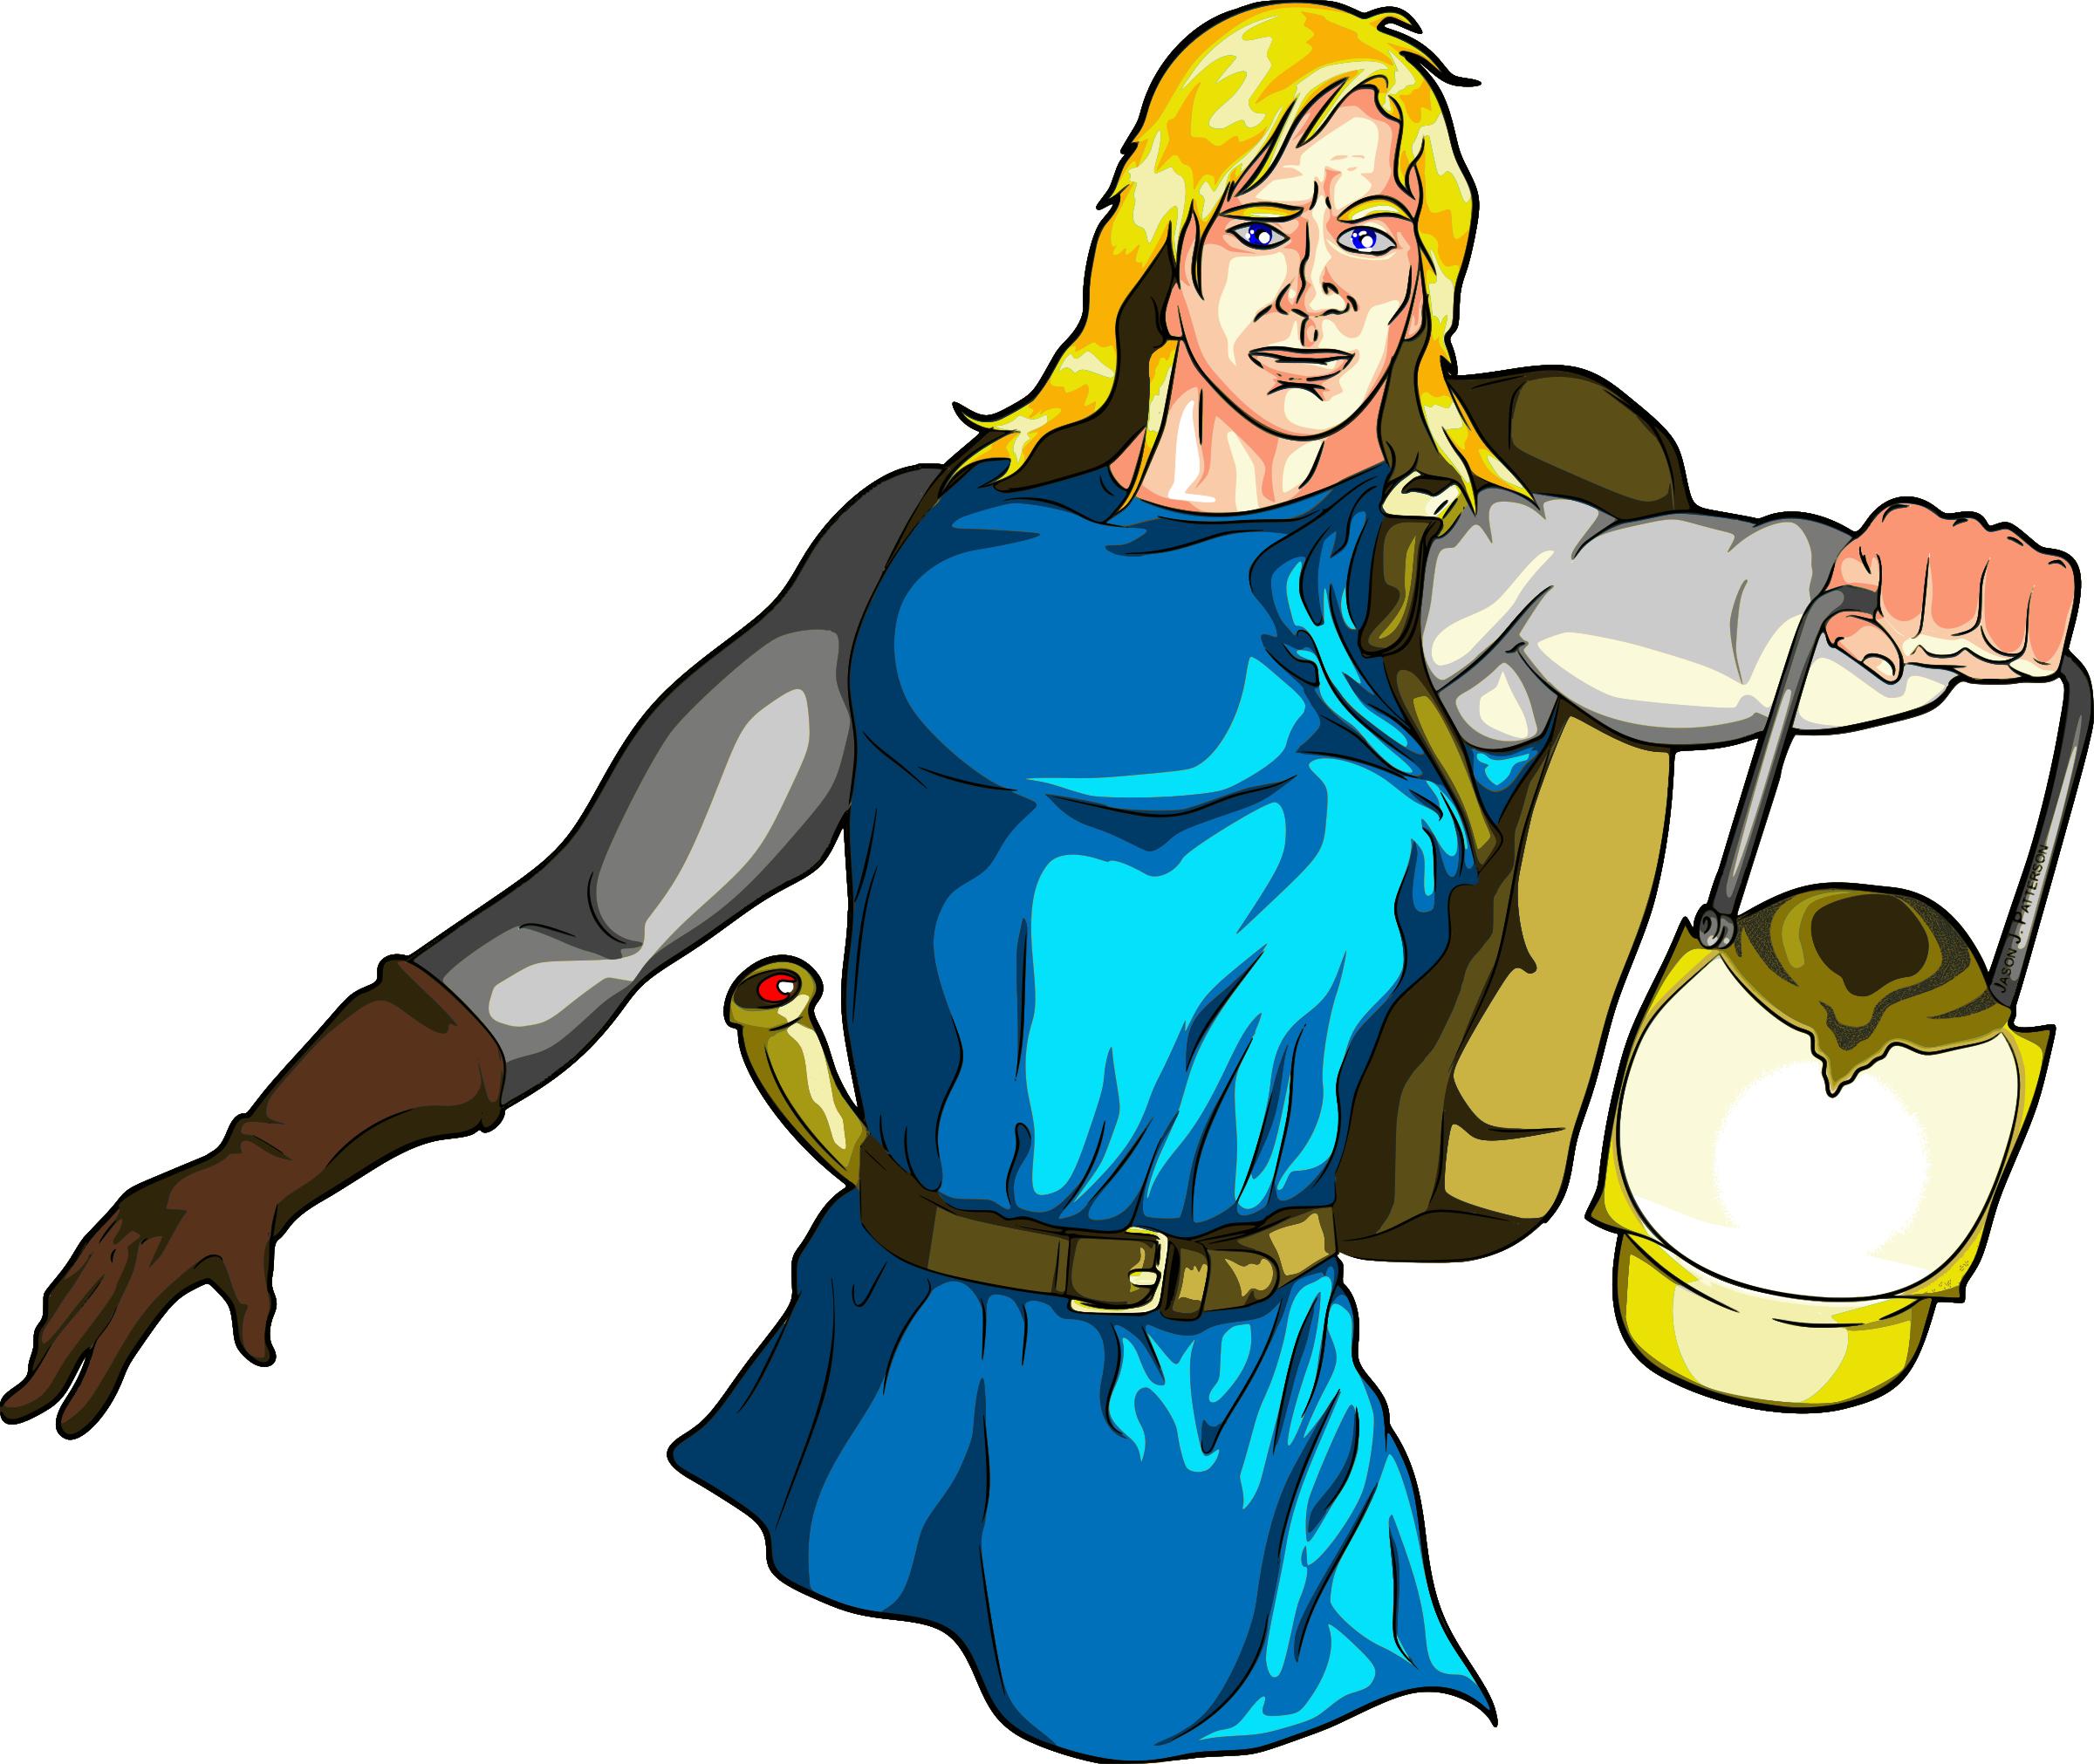 Blonde Male Medieval Adventurer with Lantern - Highlights png